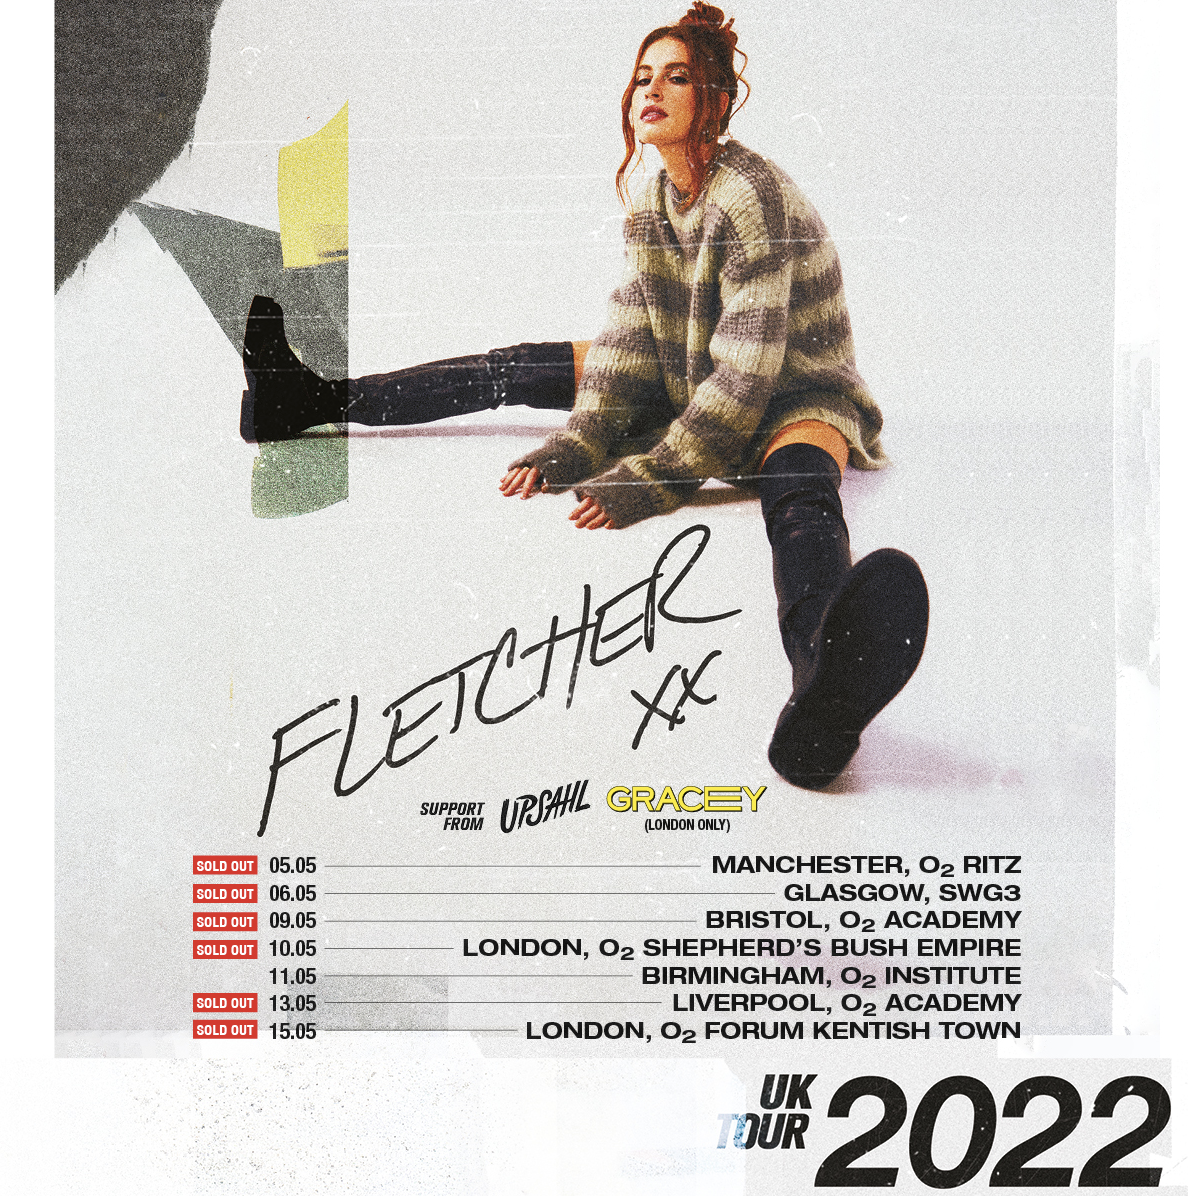 Fletcher tour dates poster